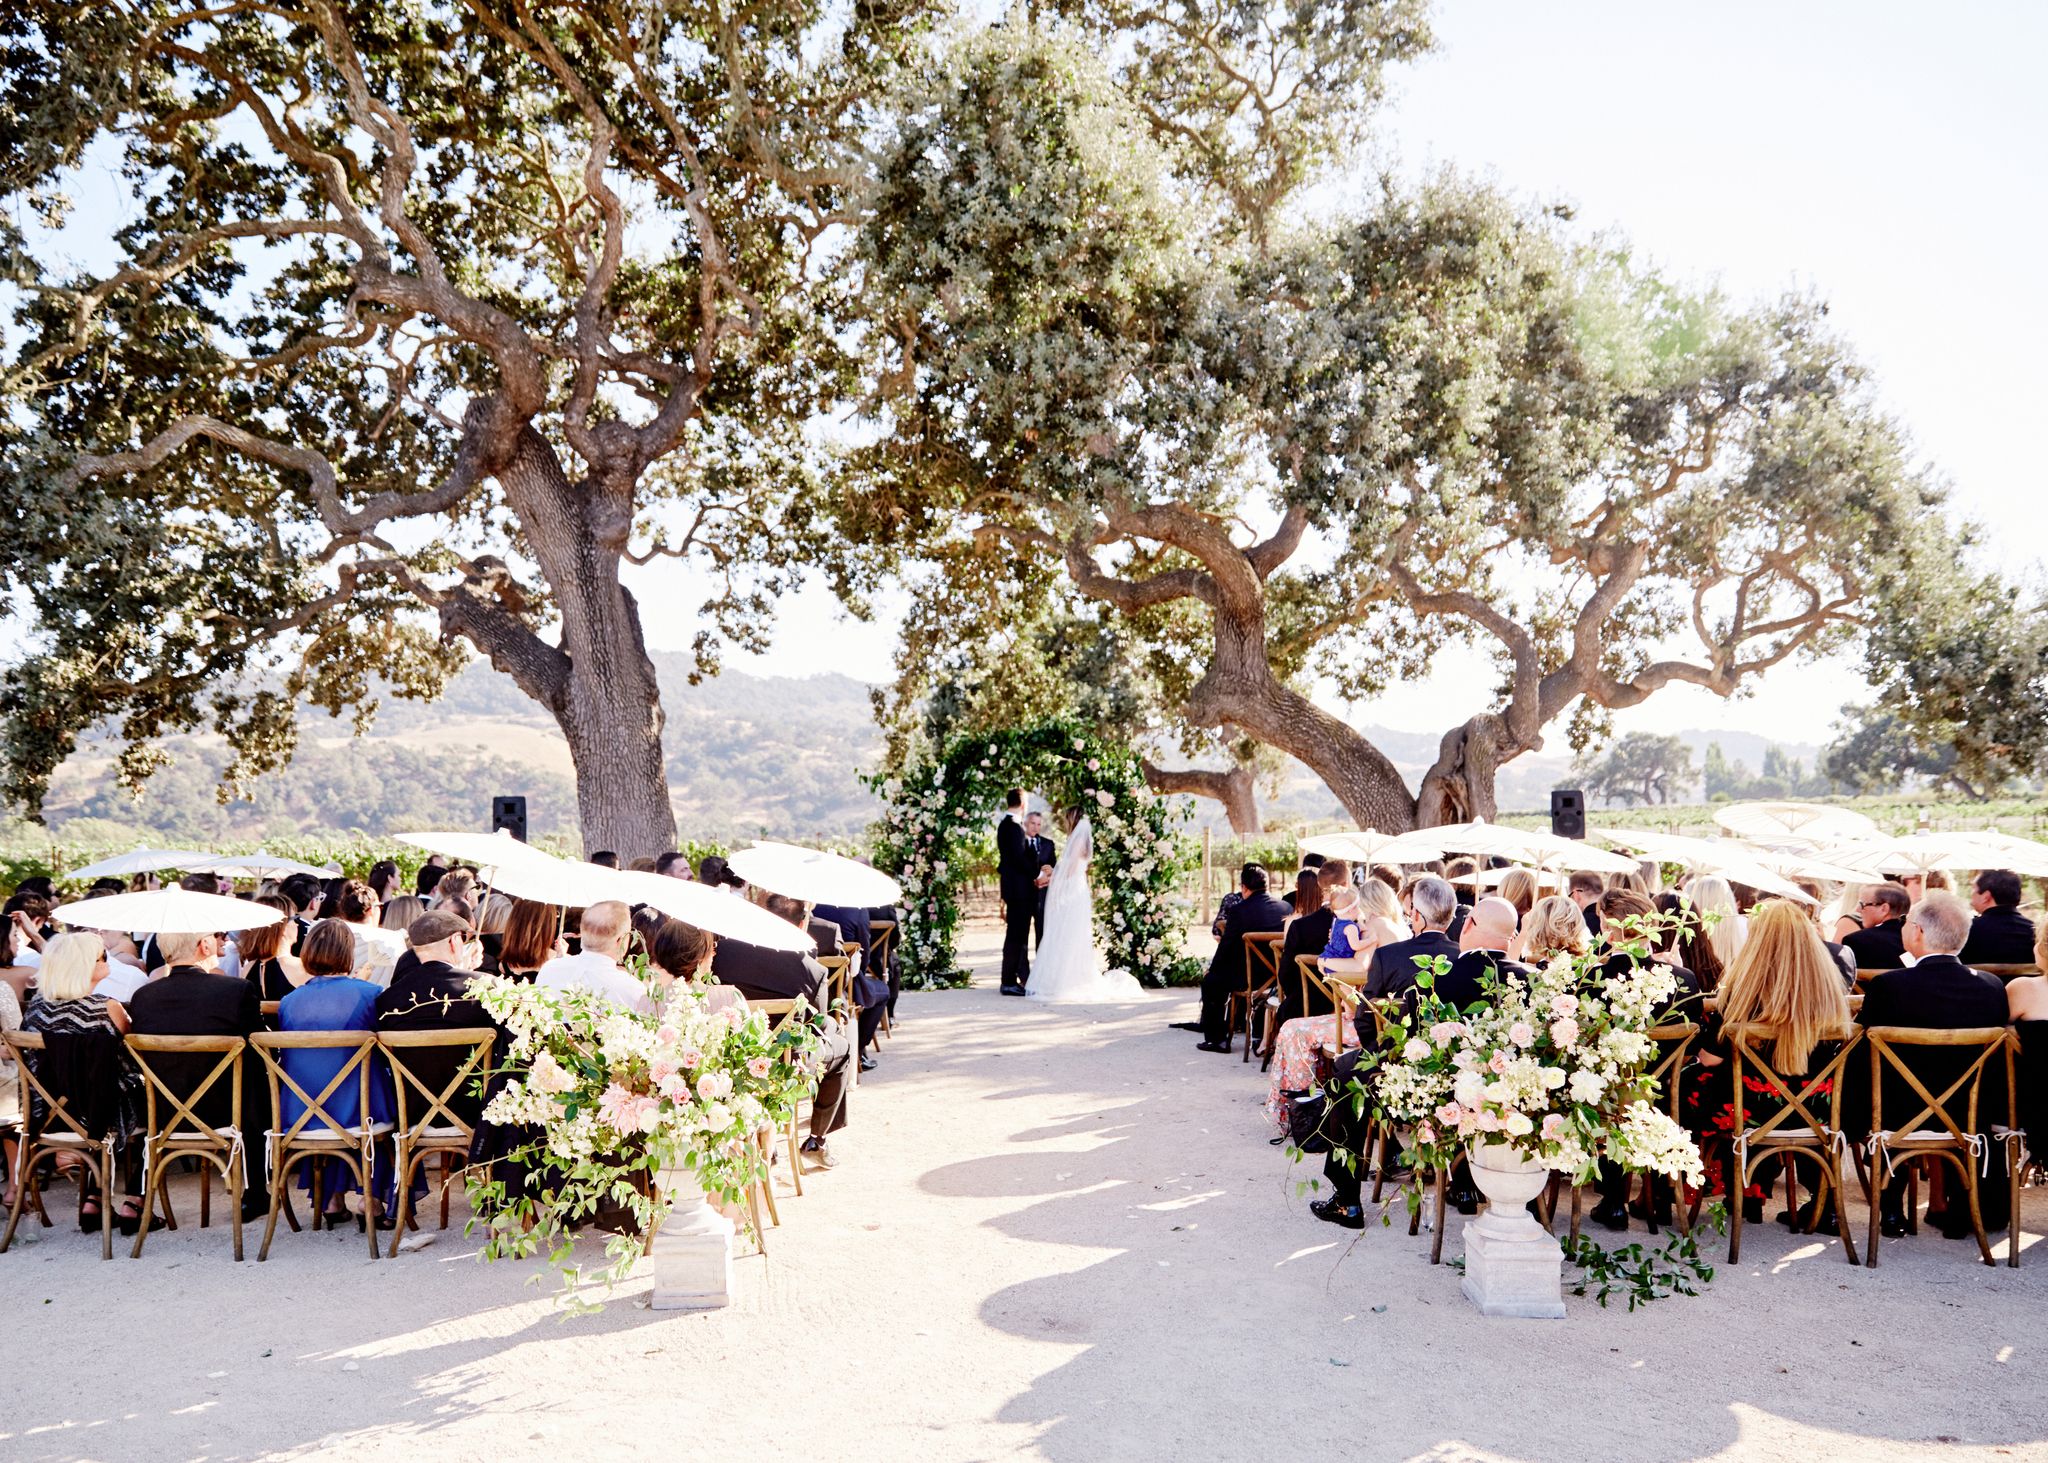 Photograph, Tree, Ceremony, Event, Table, Plant, Wedding, Landscape, Wedding reception, Photography, 